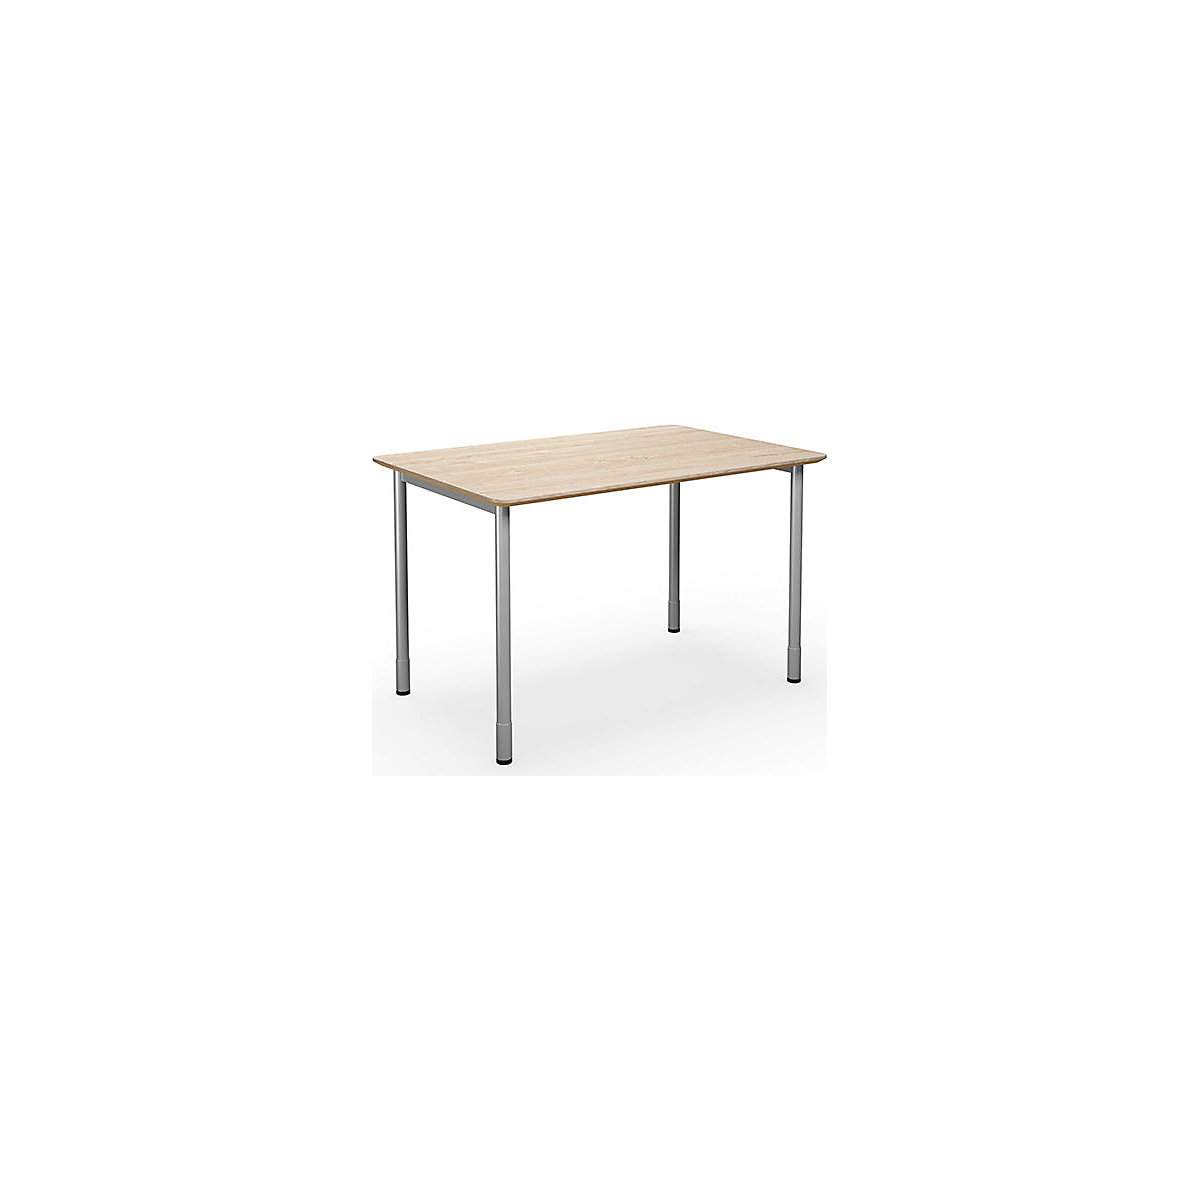 Višenamjenski stol DUO-C Trend, ravna ploča, zaobljeni kutovi